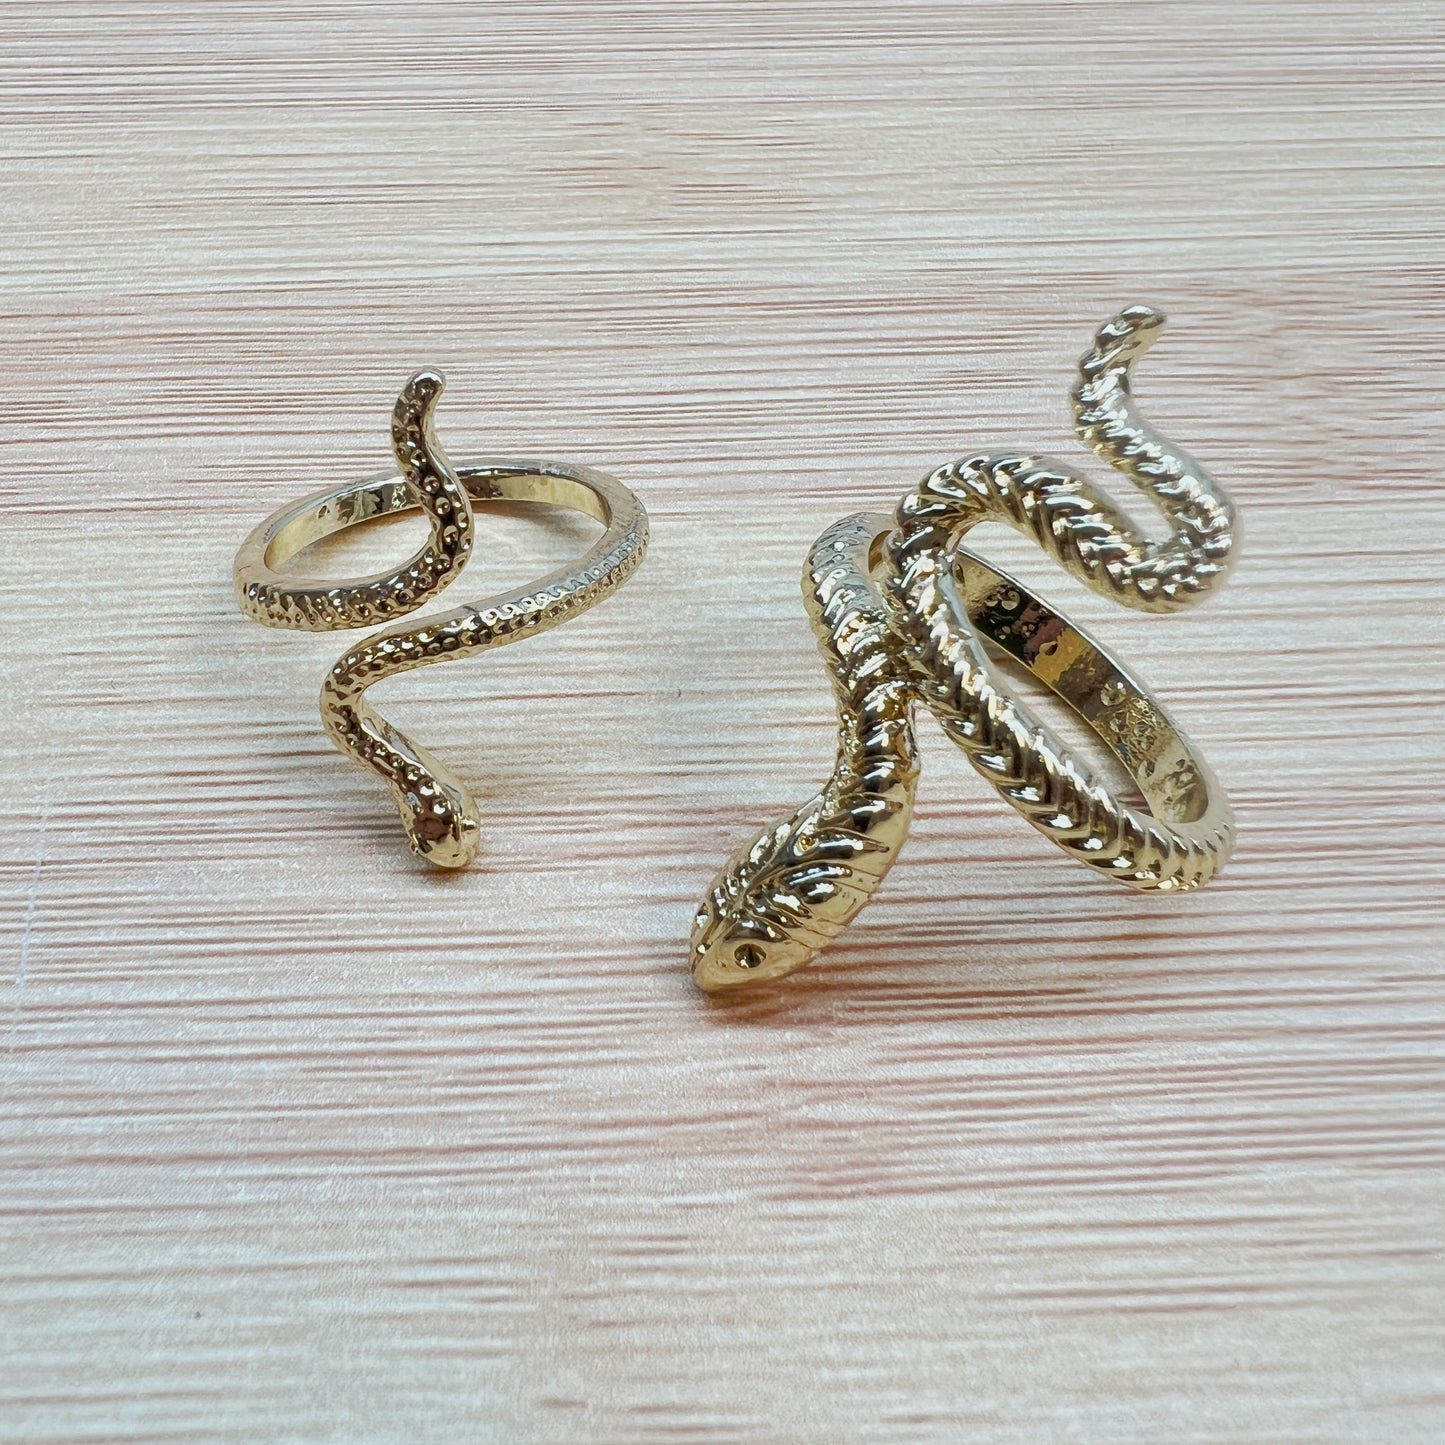 Gothic Wrap Around Snake Ring - Assortment 10 Pcs